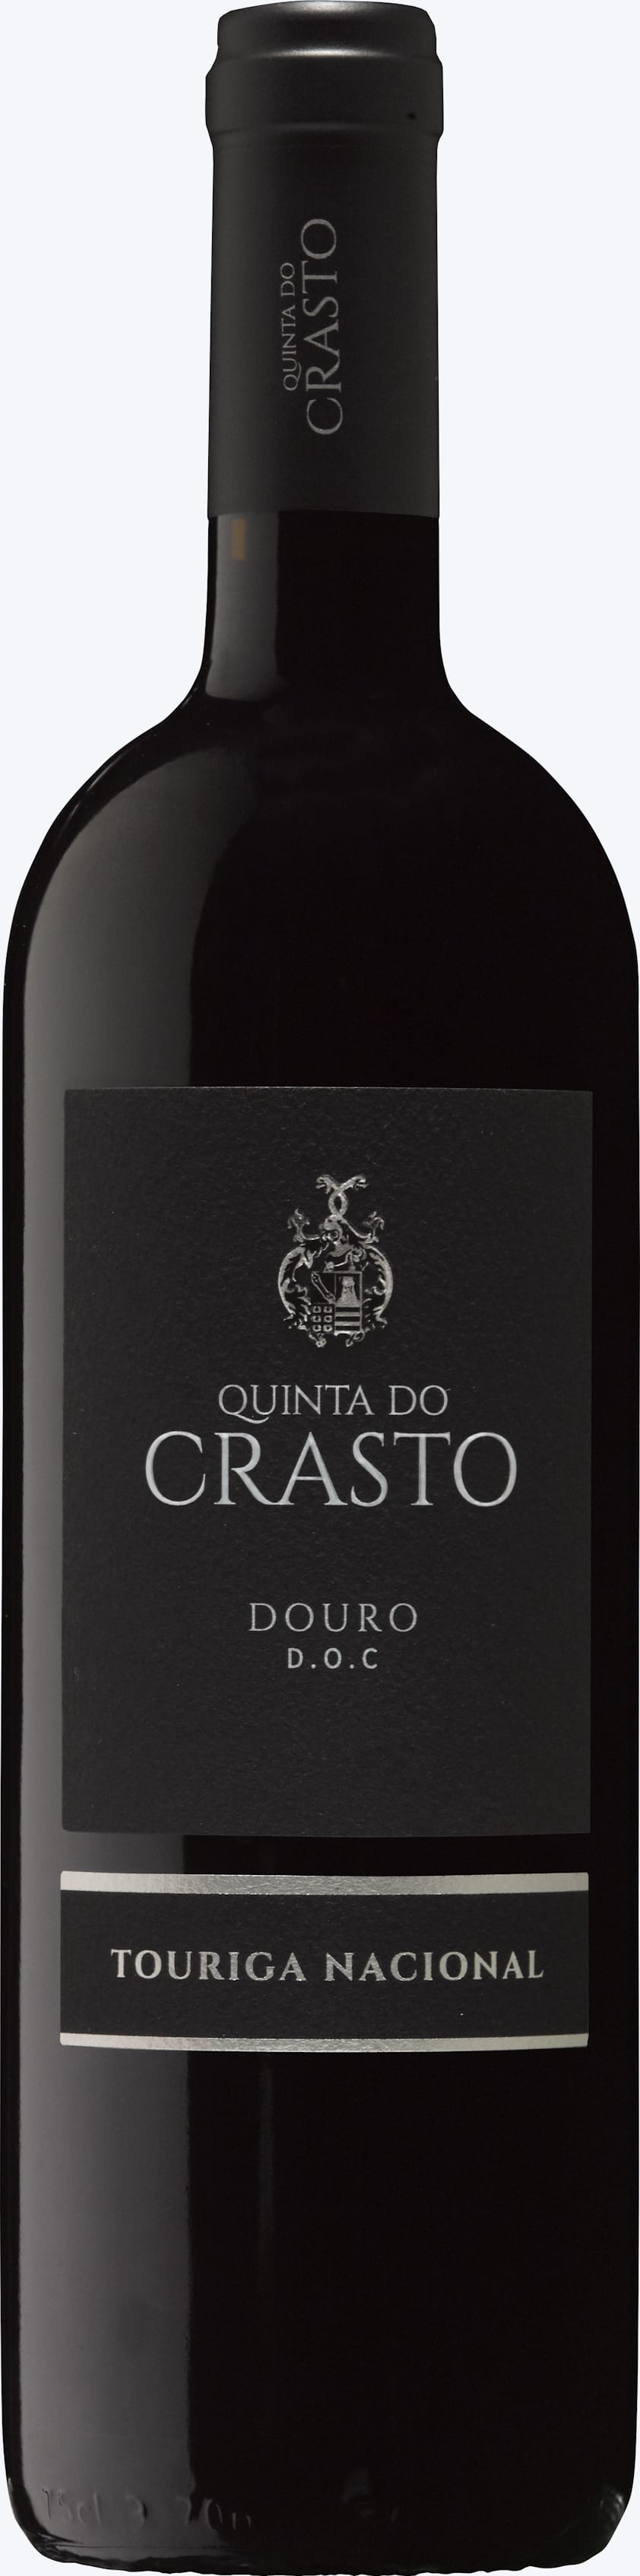 Quinta Do Crasto Touriga Nacional 2018 75cl - Buy Quinta Do Crasto Wines from GREAT WINES DIRECT wine shop